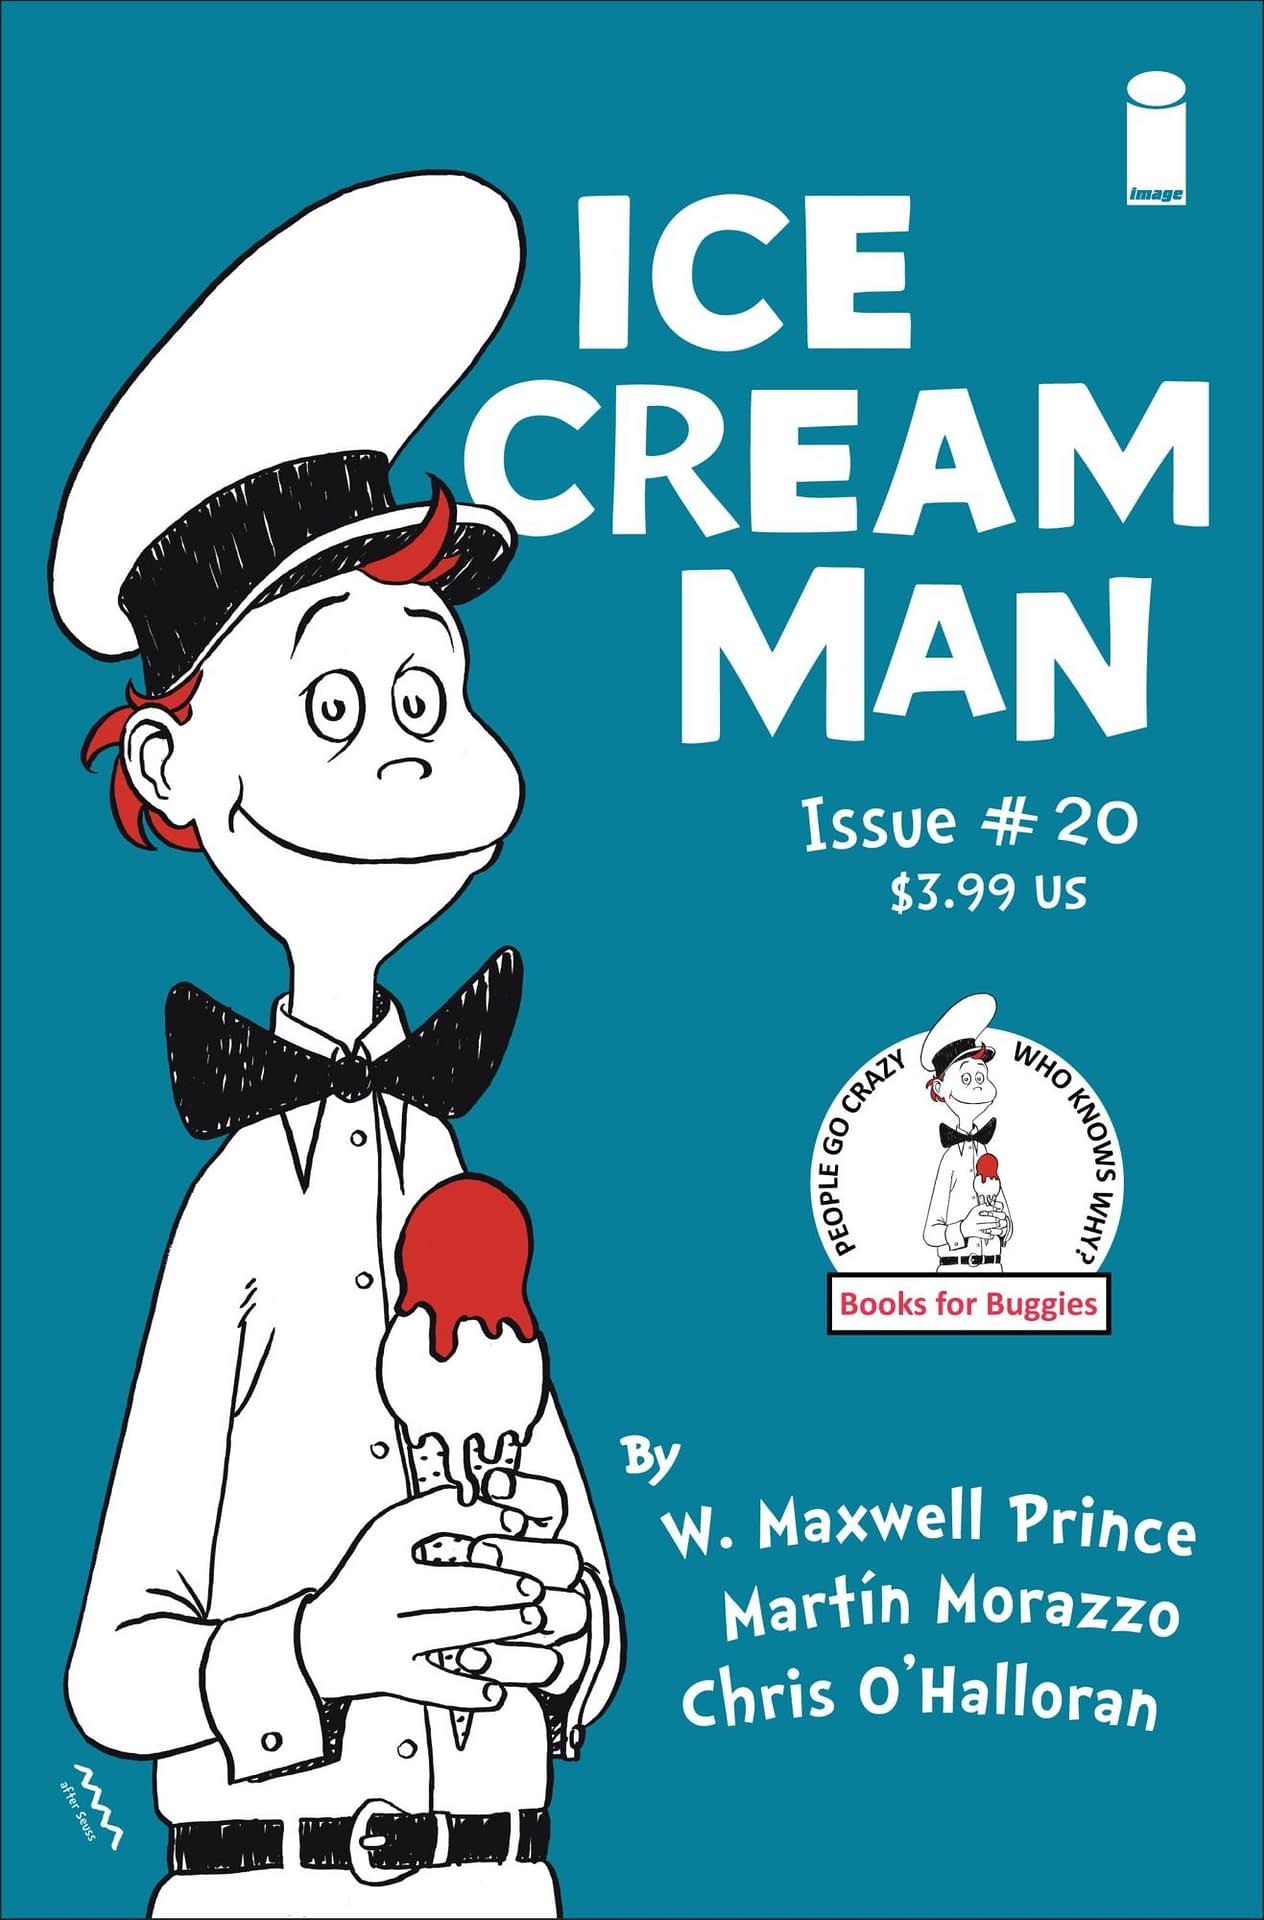 Ice Cream Man Series Adapt Very Much Still Alive Unlike Quibi